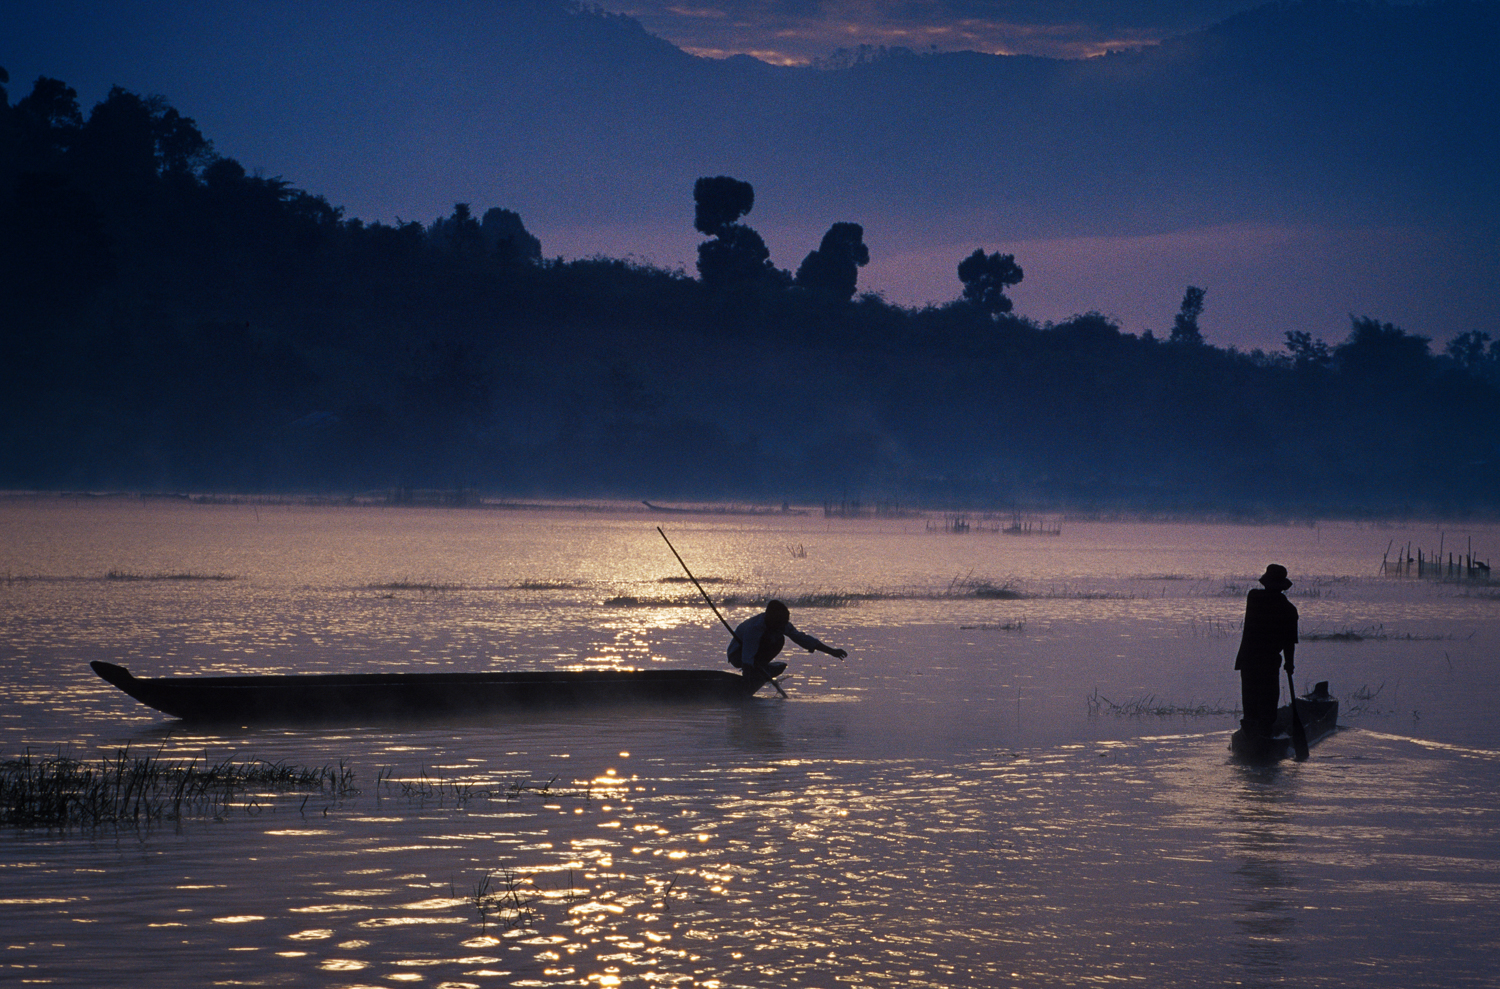 Mekong river 0302...